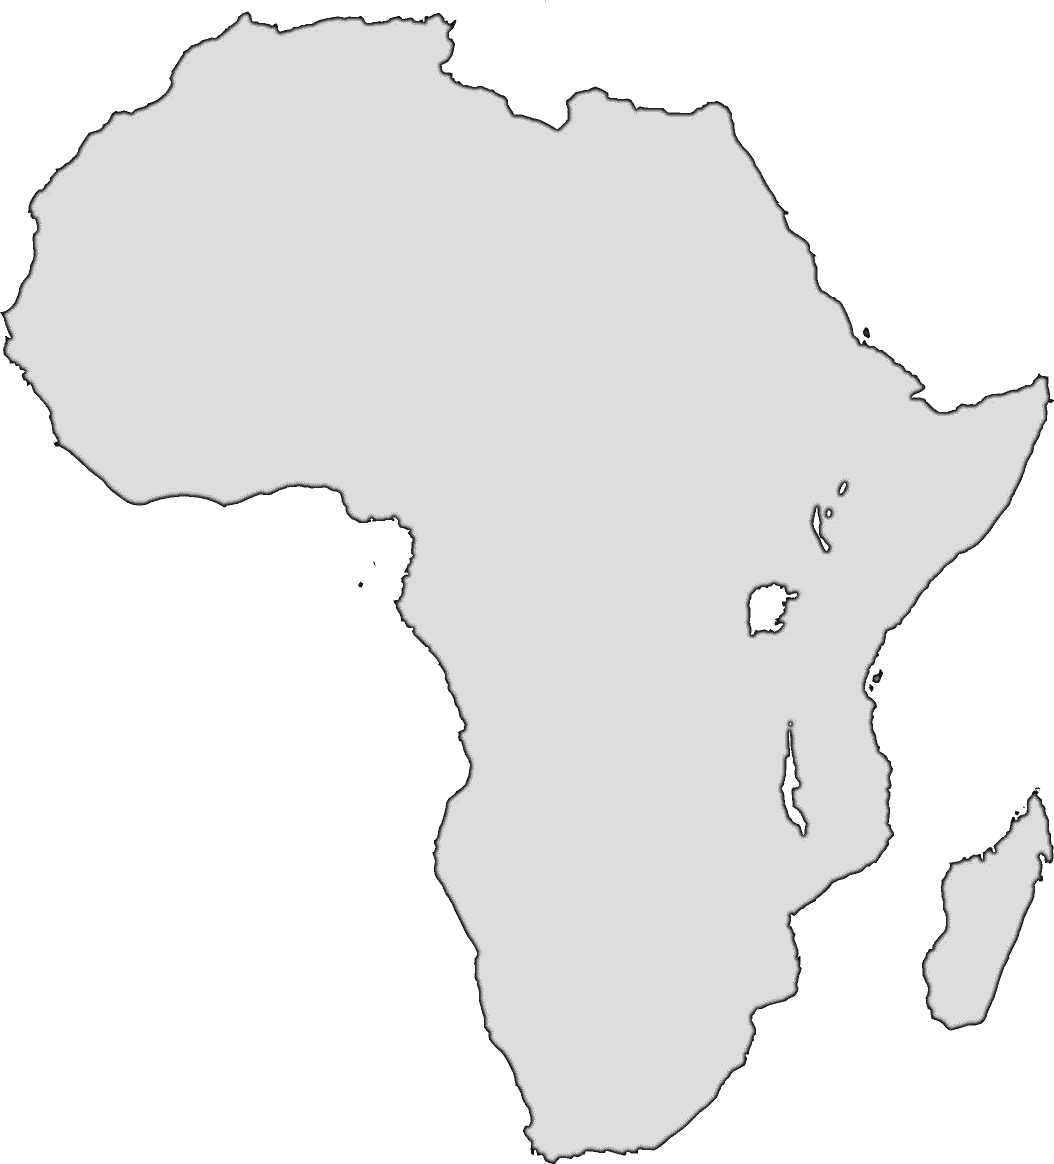 Africa large BW